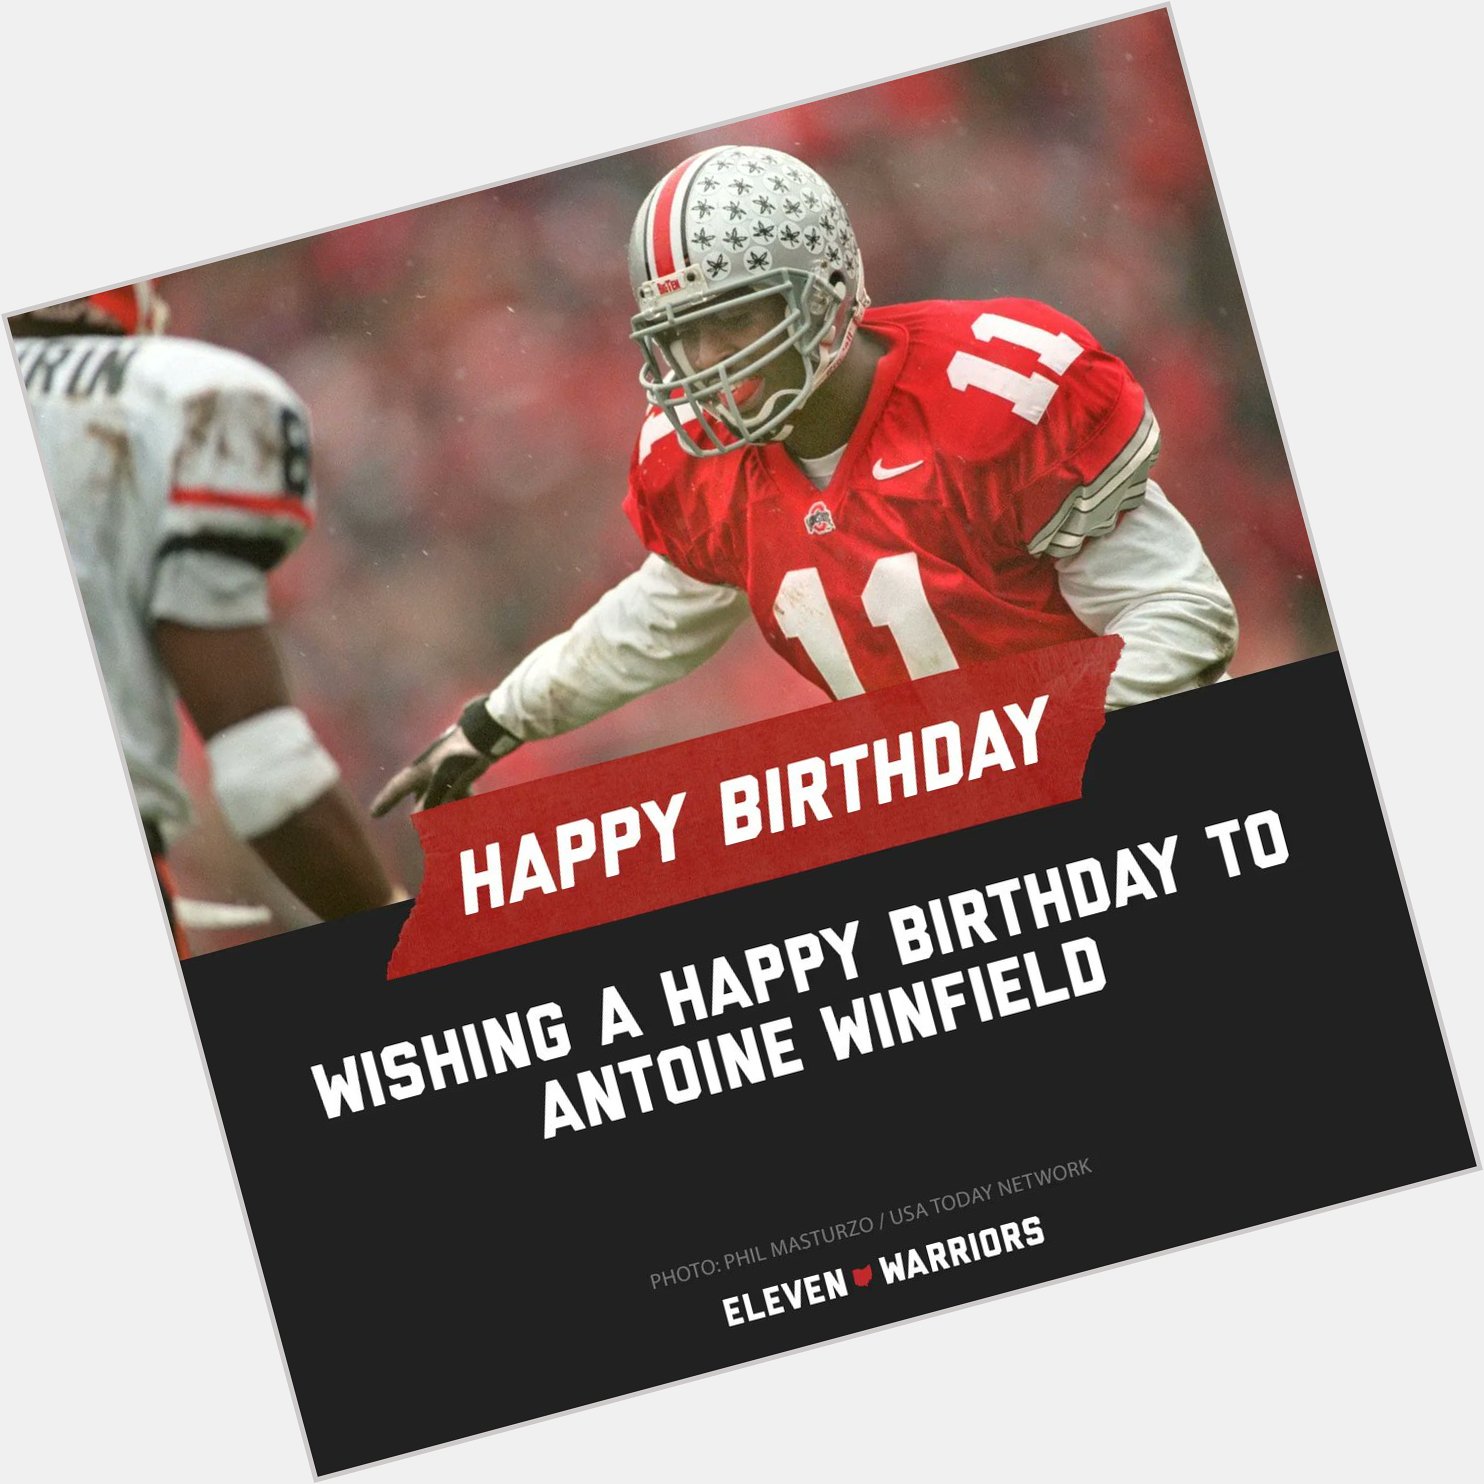 Wishing a happy birthday to Antoine Winfield! 